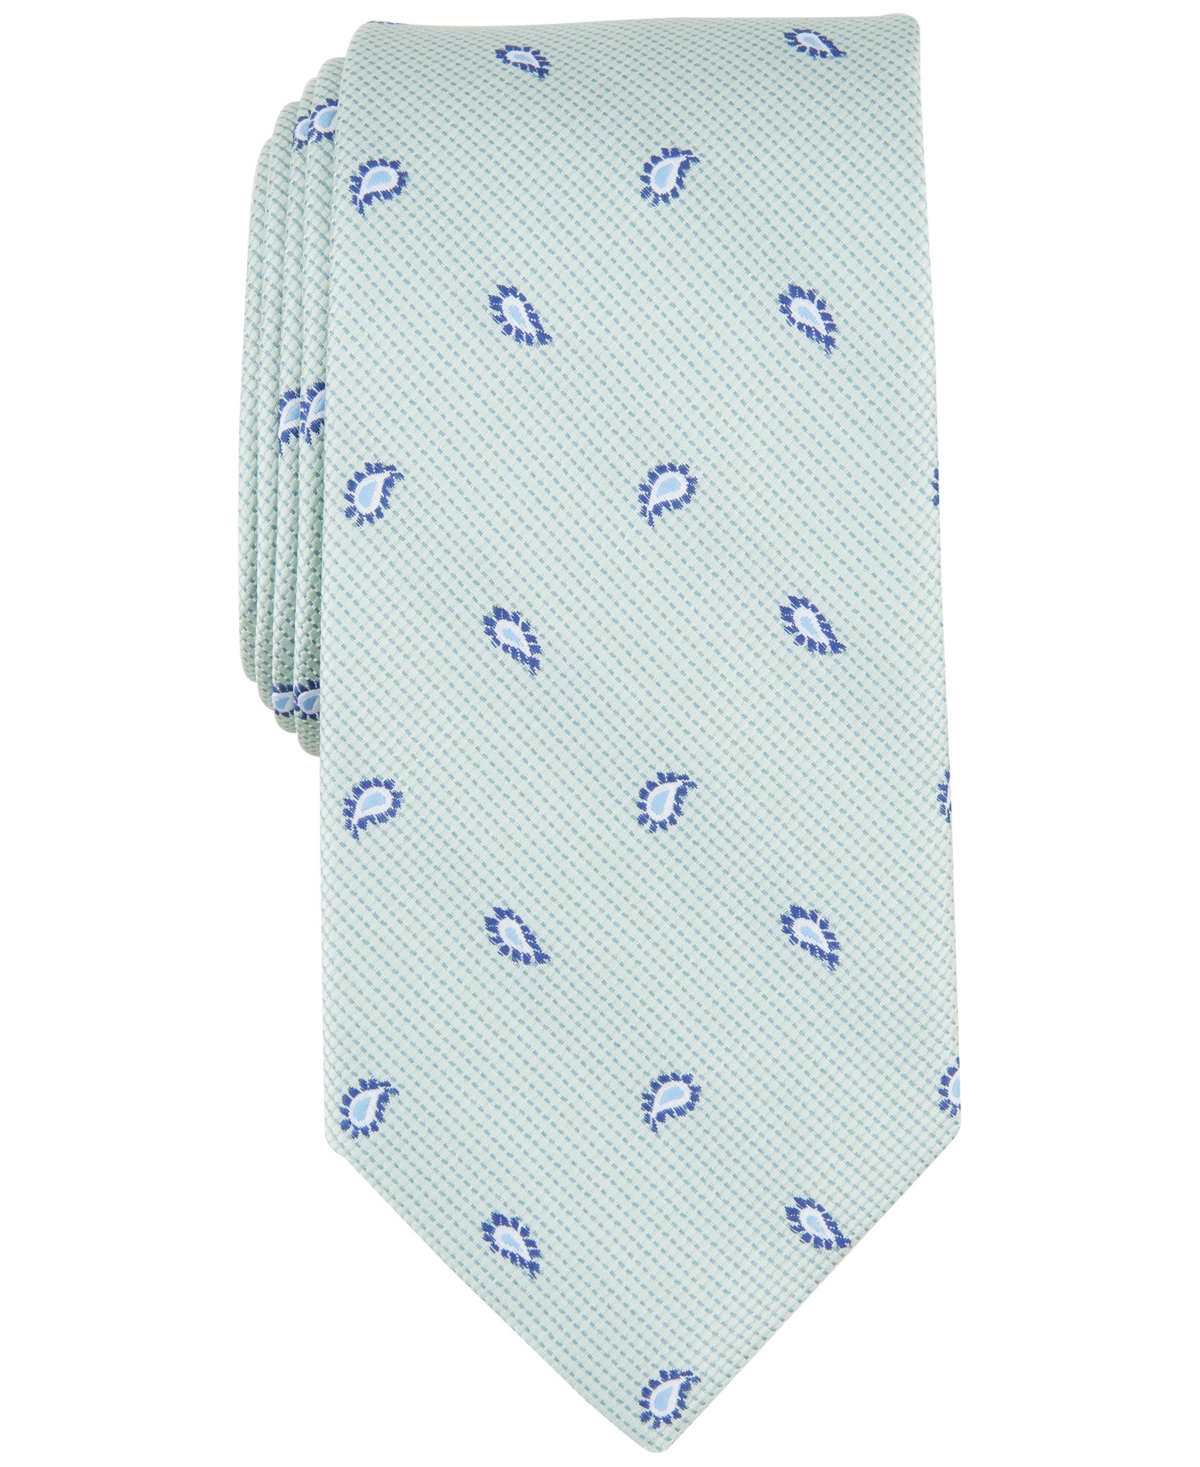 Men's Paisley Teardrop Tie, Created for Macy's - Green